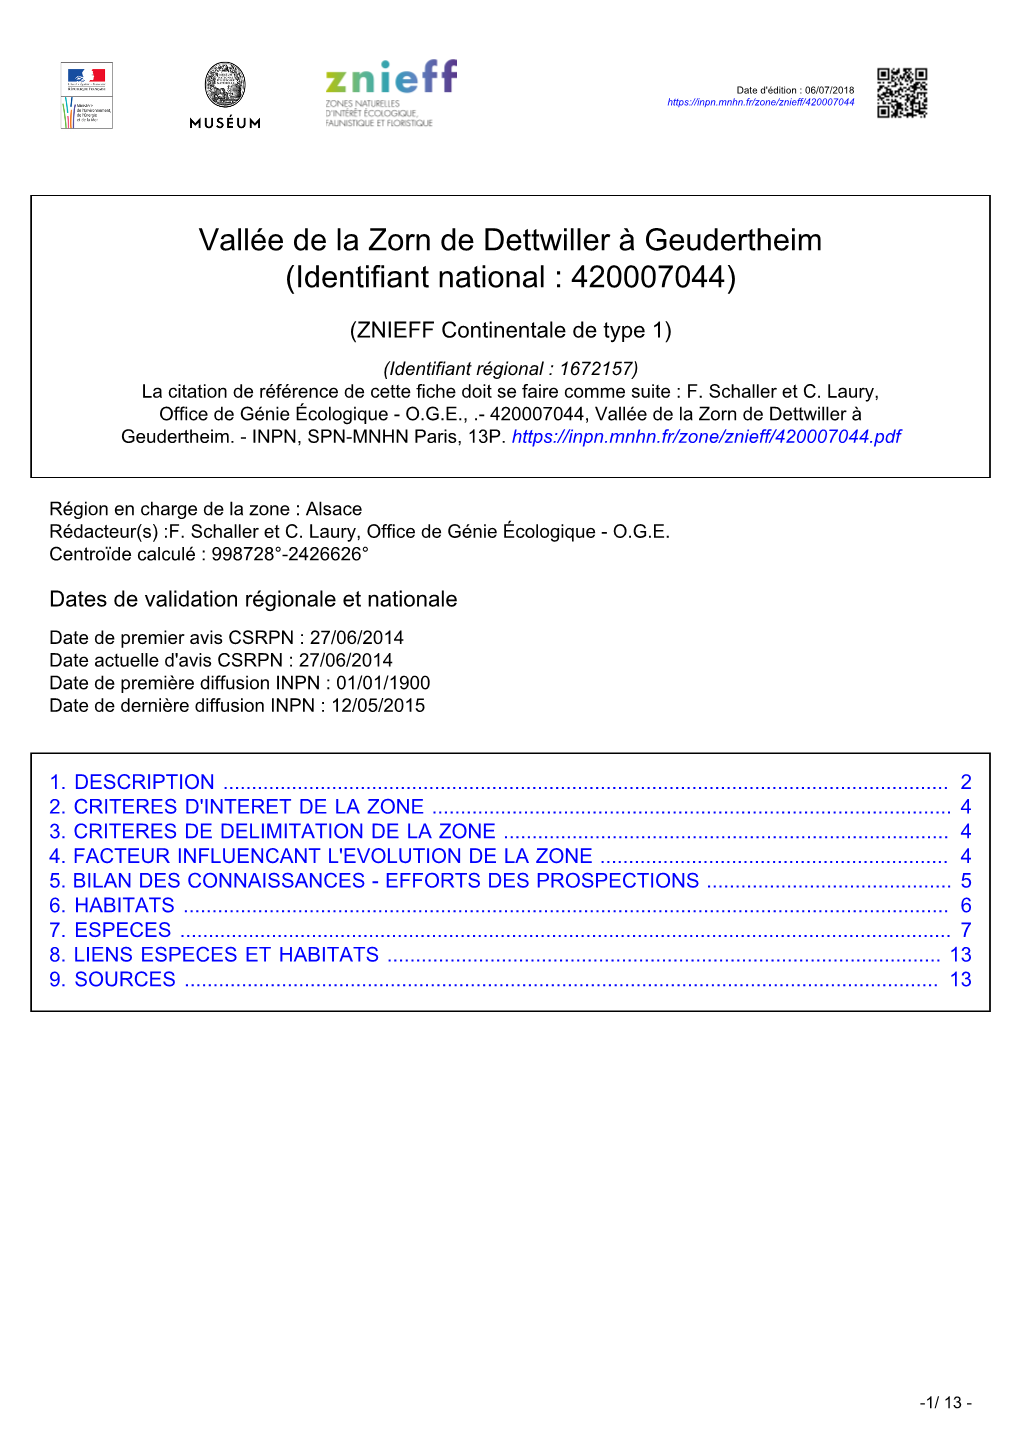 Vallée De La Zorn De Dettwiller À Geudertheim (Identifiant National : 420007044)